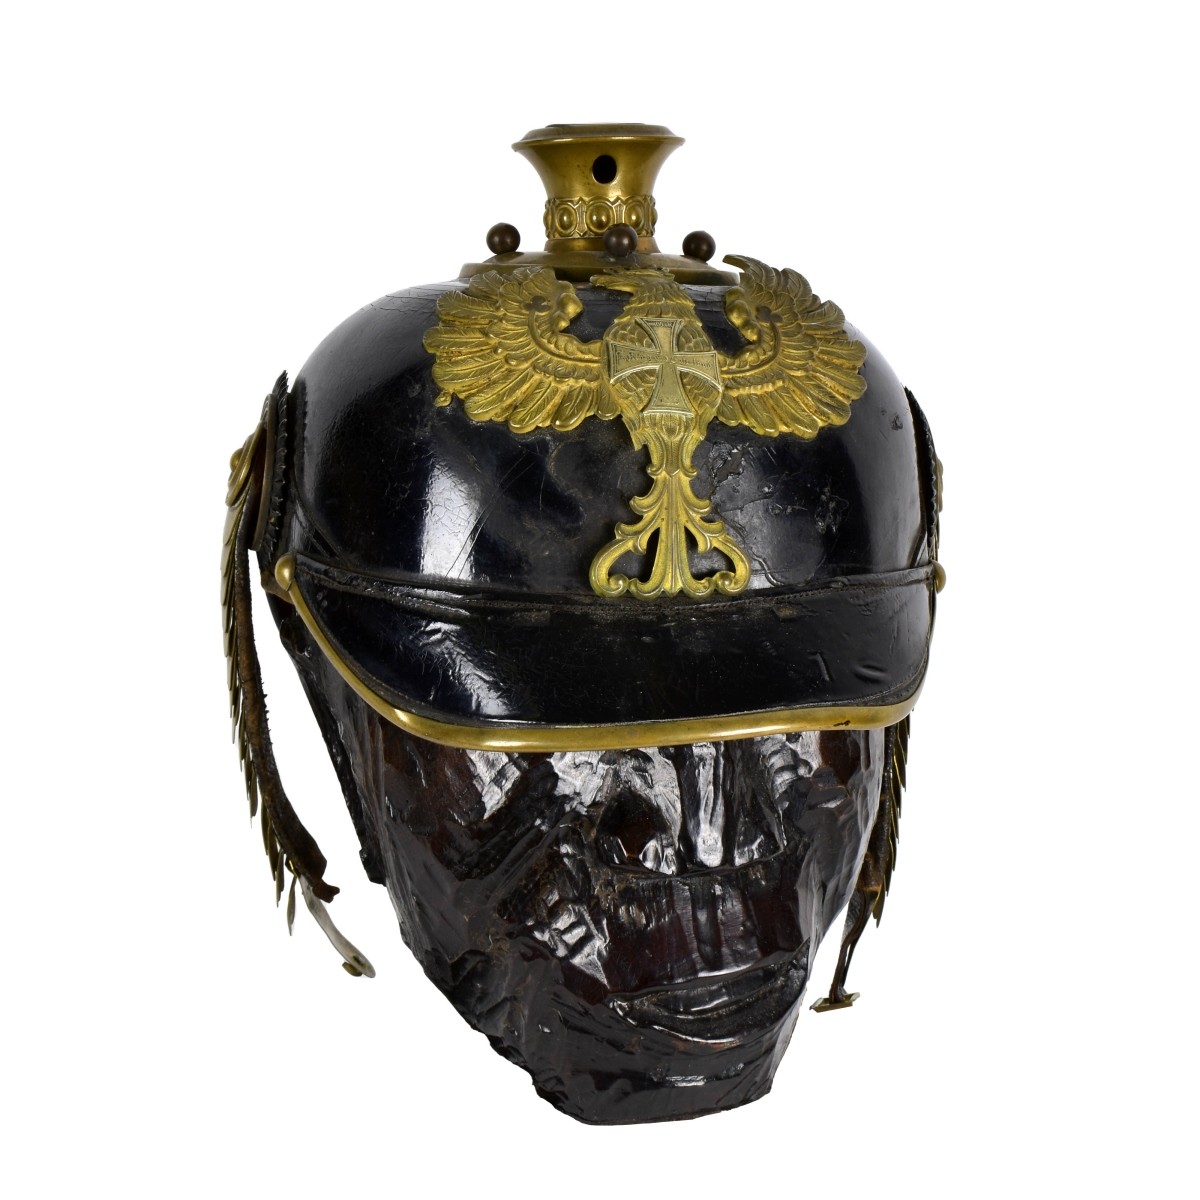 German World War I Helmet.